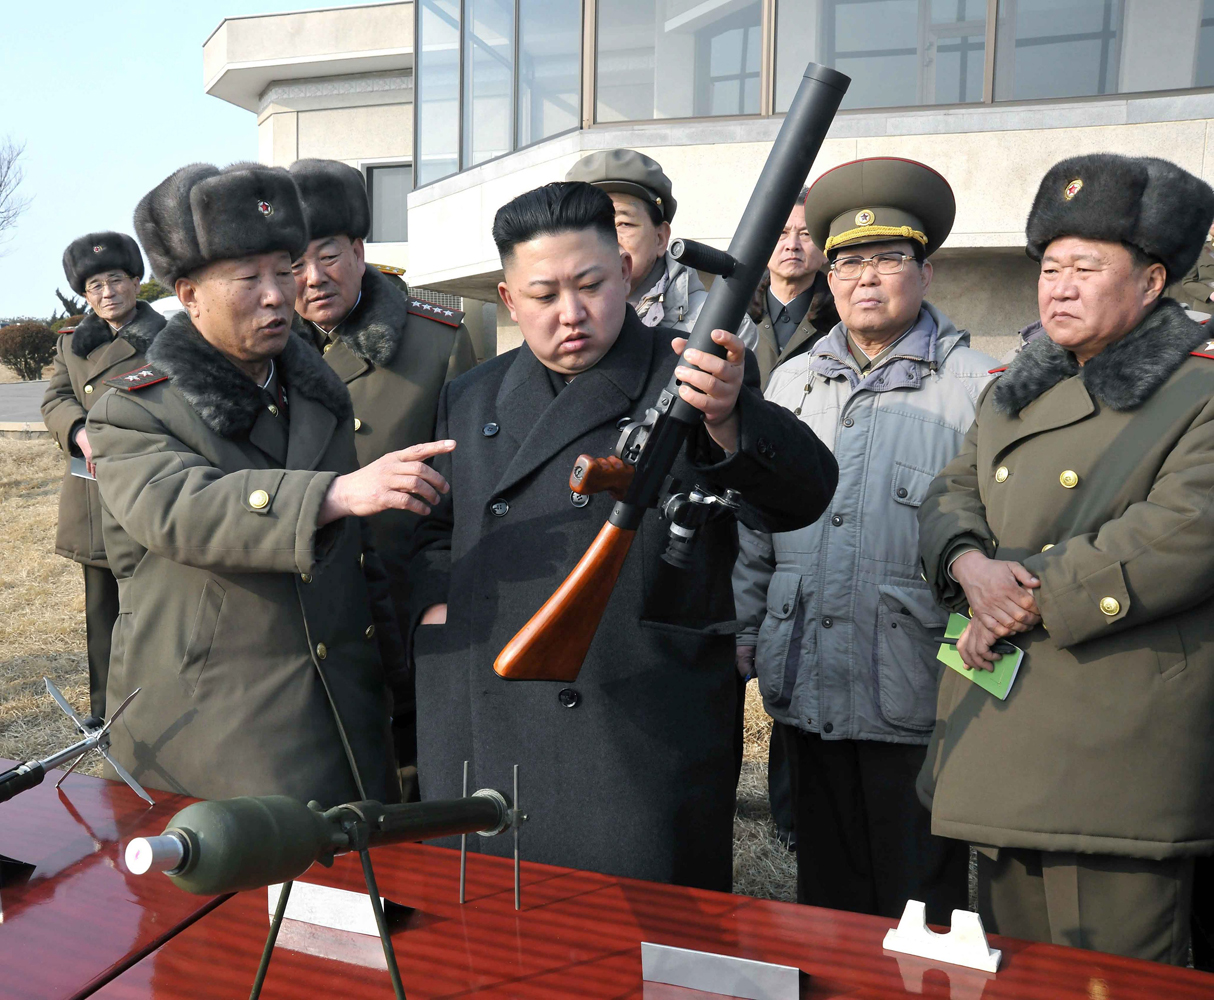 Feb. 26, 2013. North Korean leader Kim Jong-un takes a close look at a gun during an inspection of an artillery firing exercise at an unidentified artillery unit.